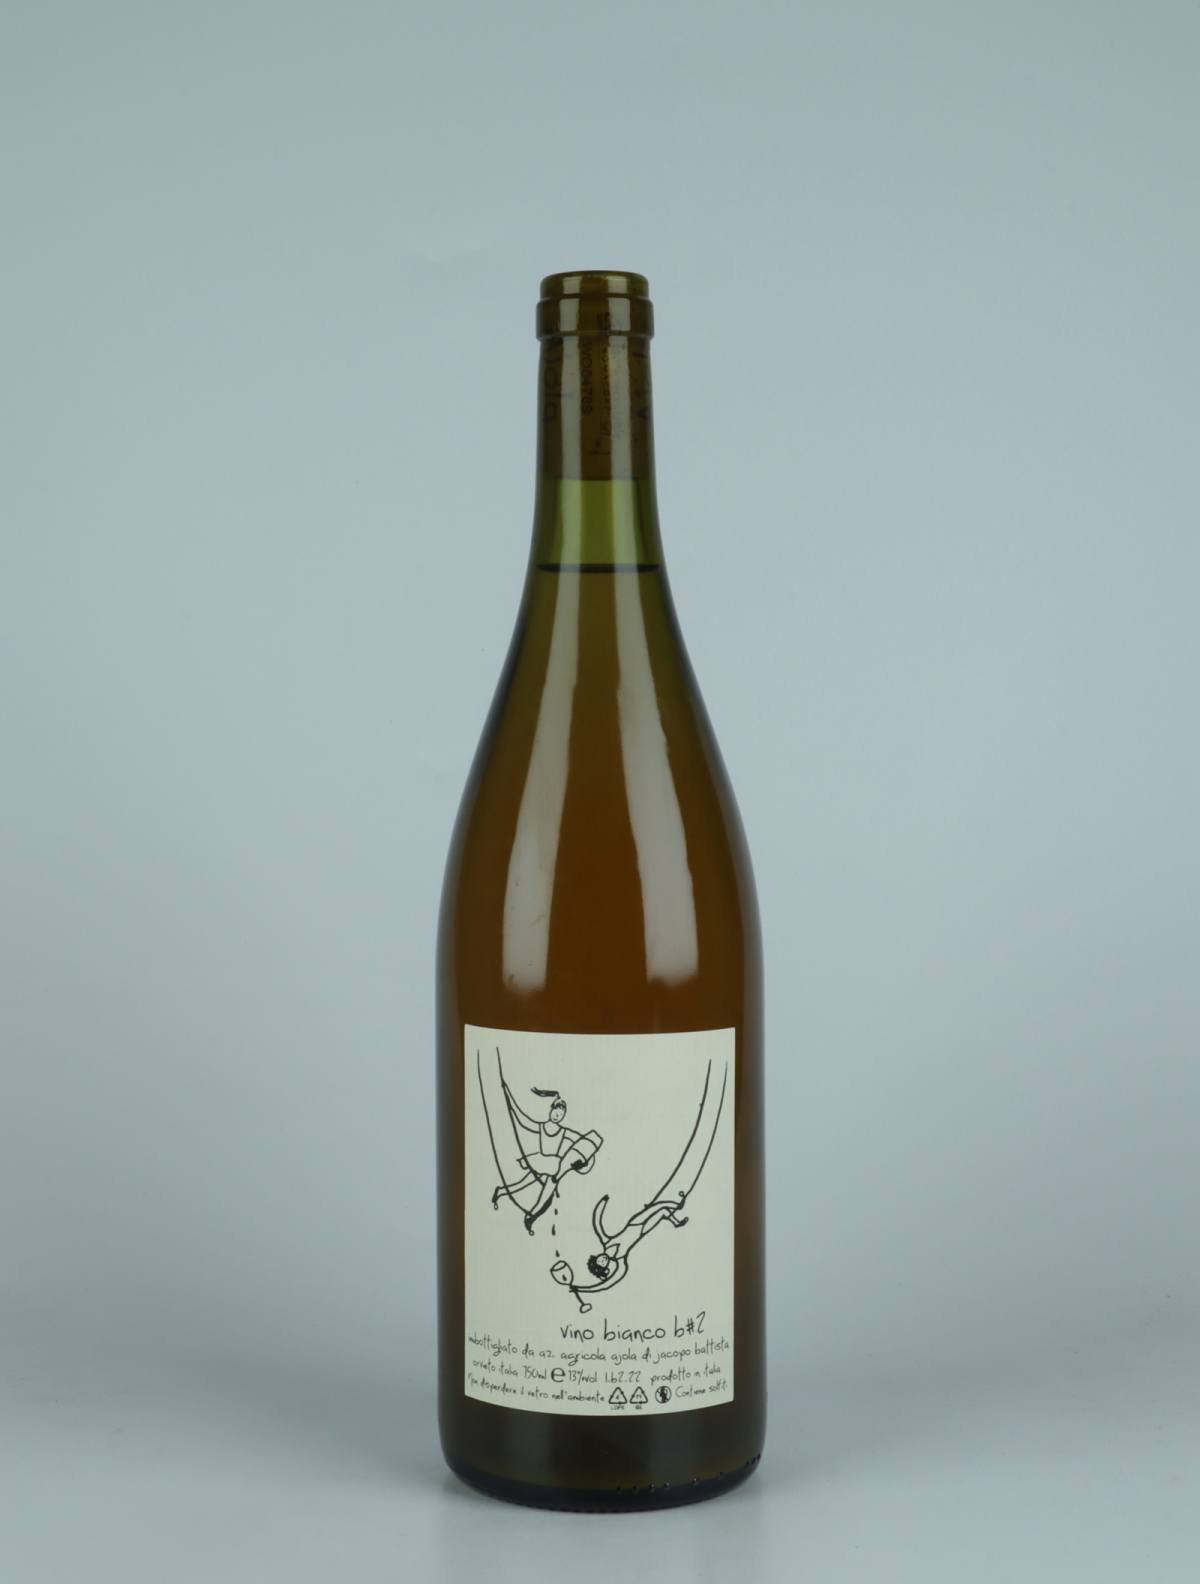 A bottle 2022 Vino Bianco #2 Orange wine from Ajola, Umbria in Italy